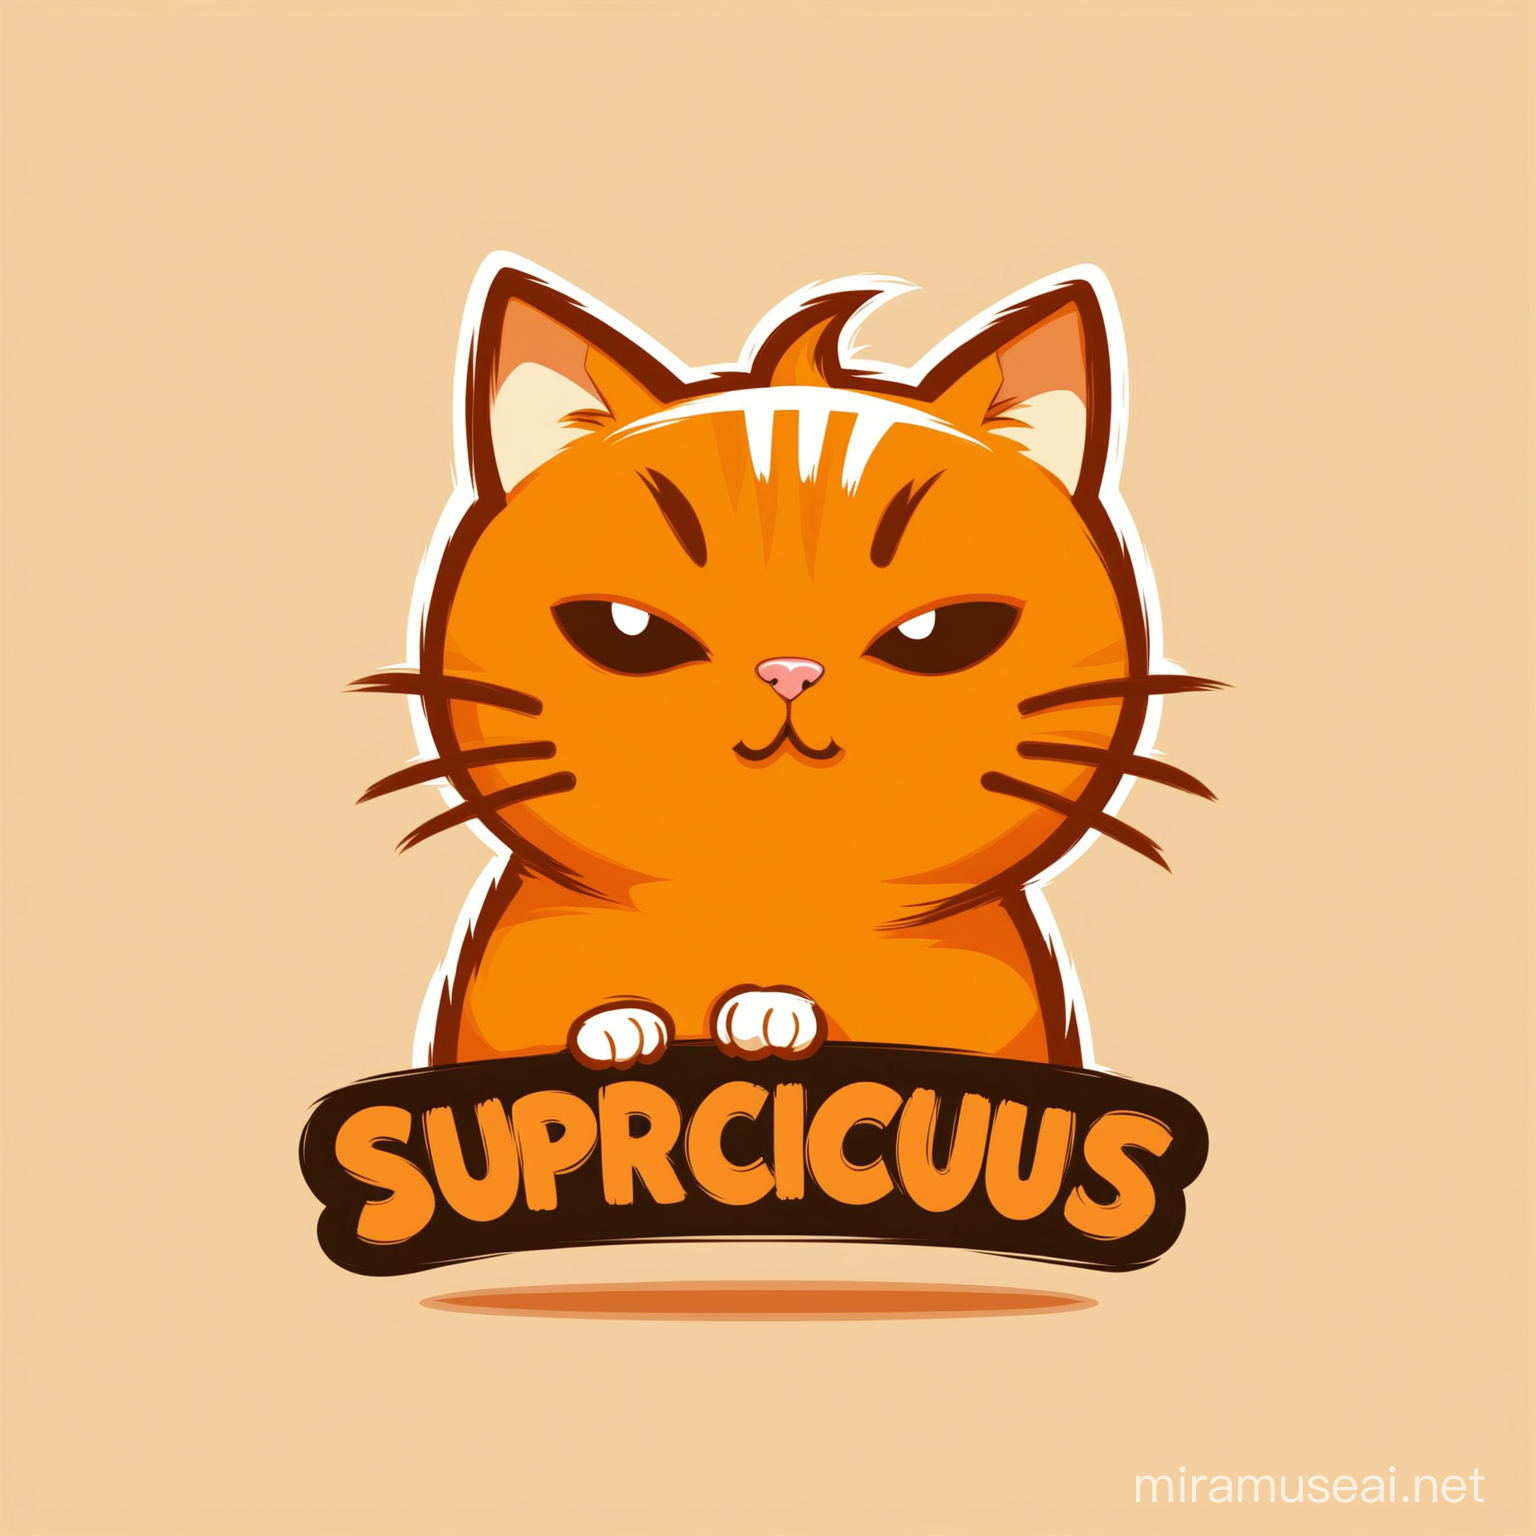 a cartoony orange suspicious cat make it like a logo
